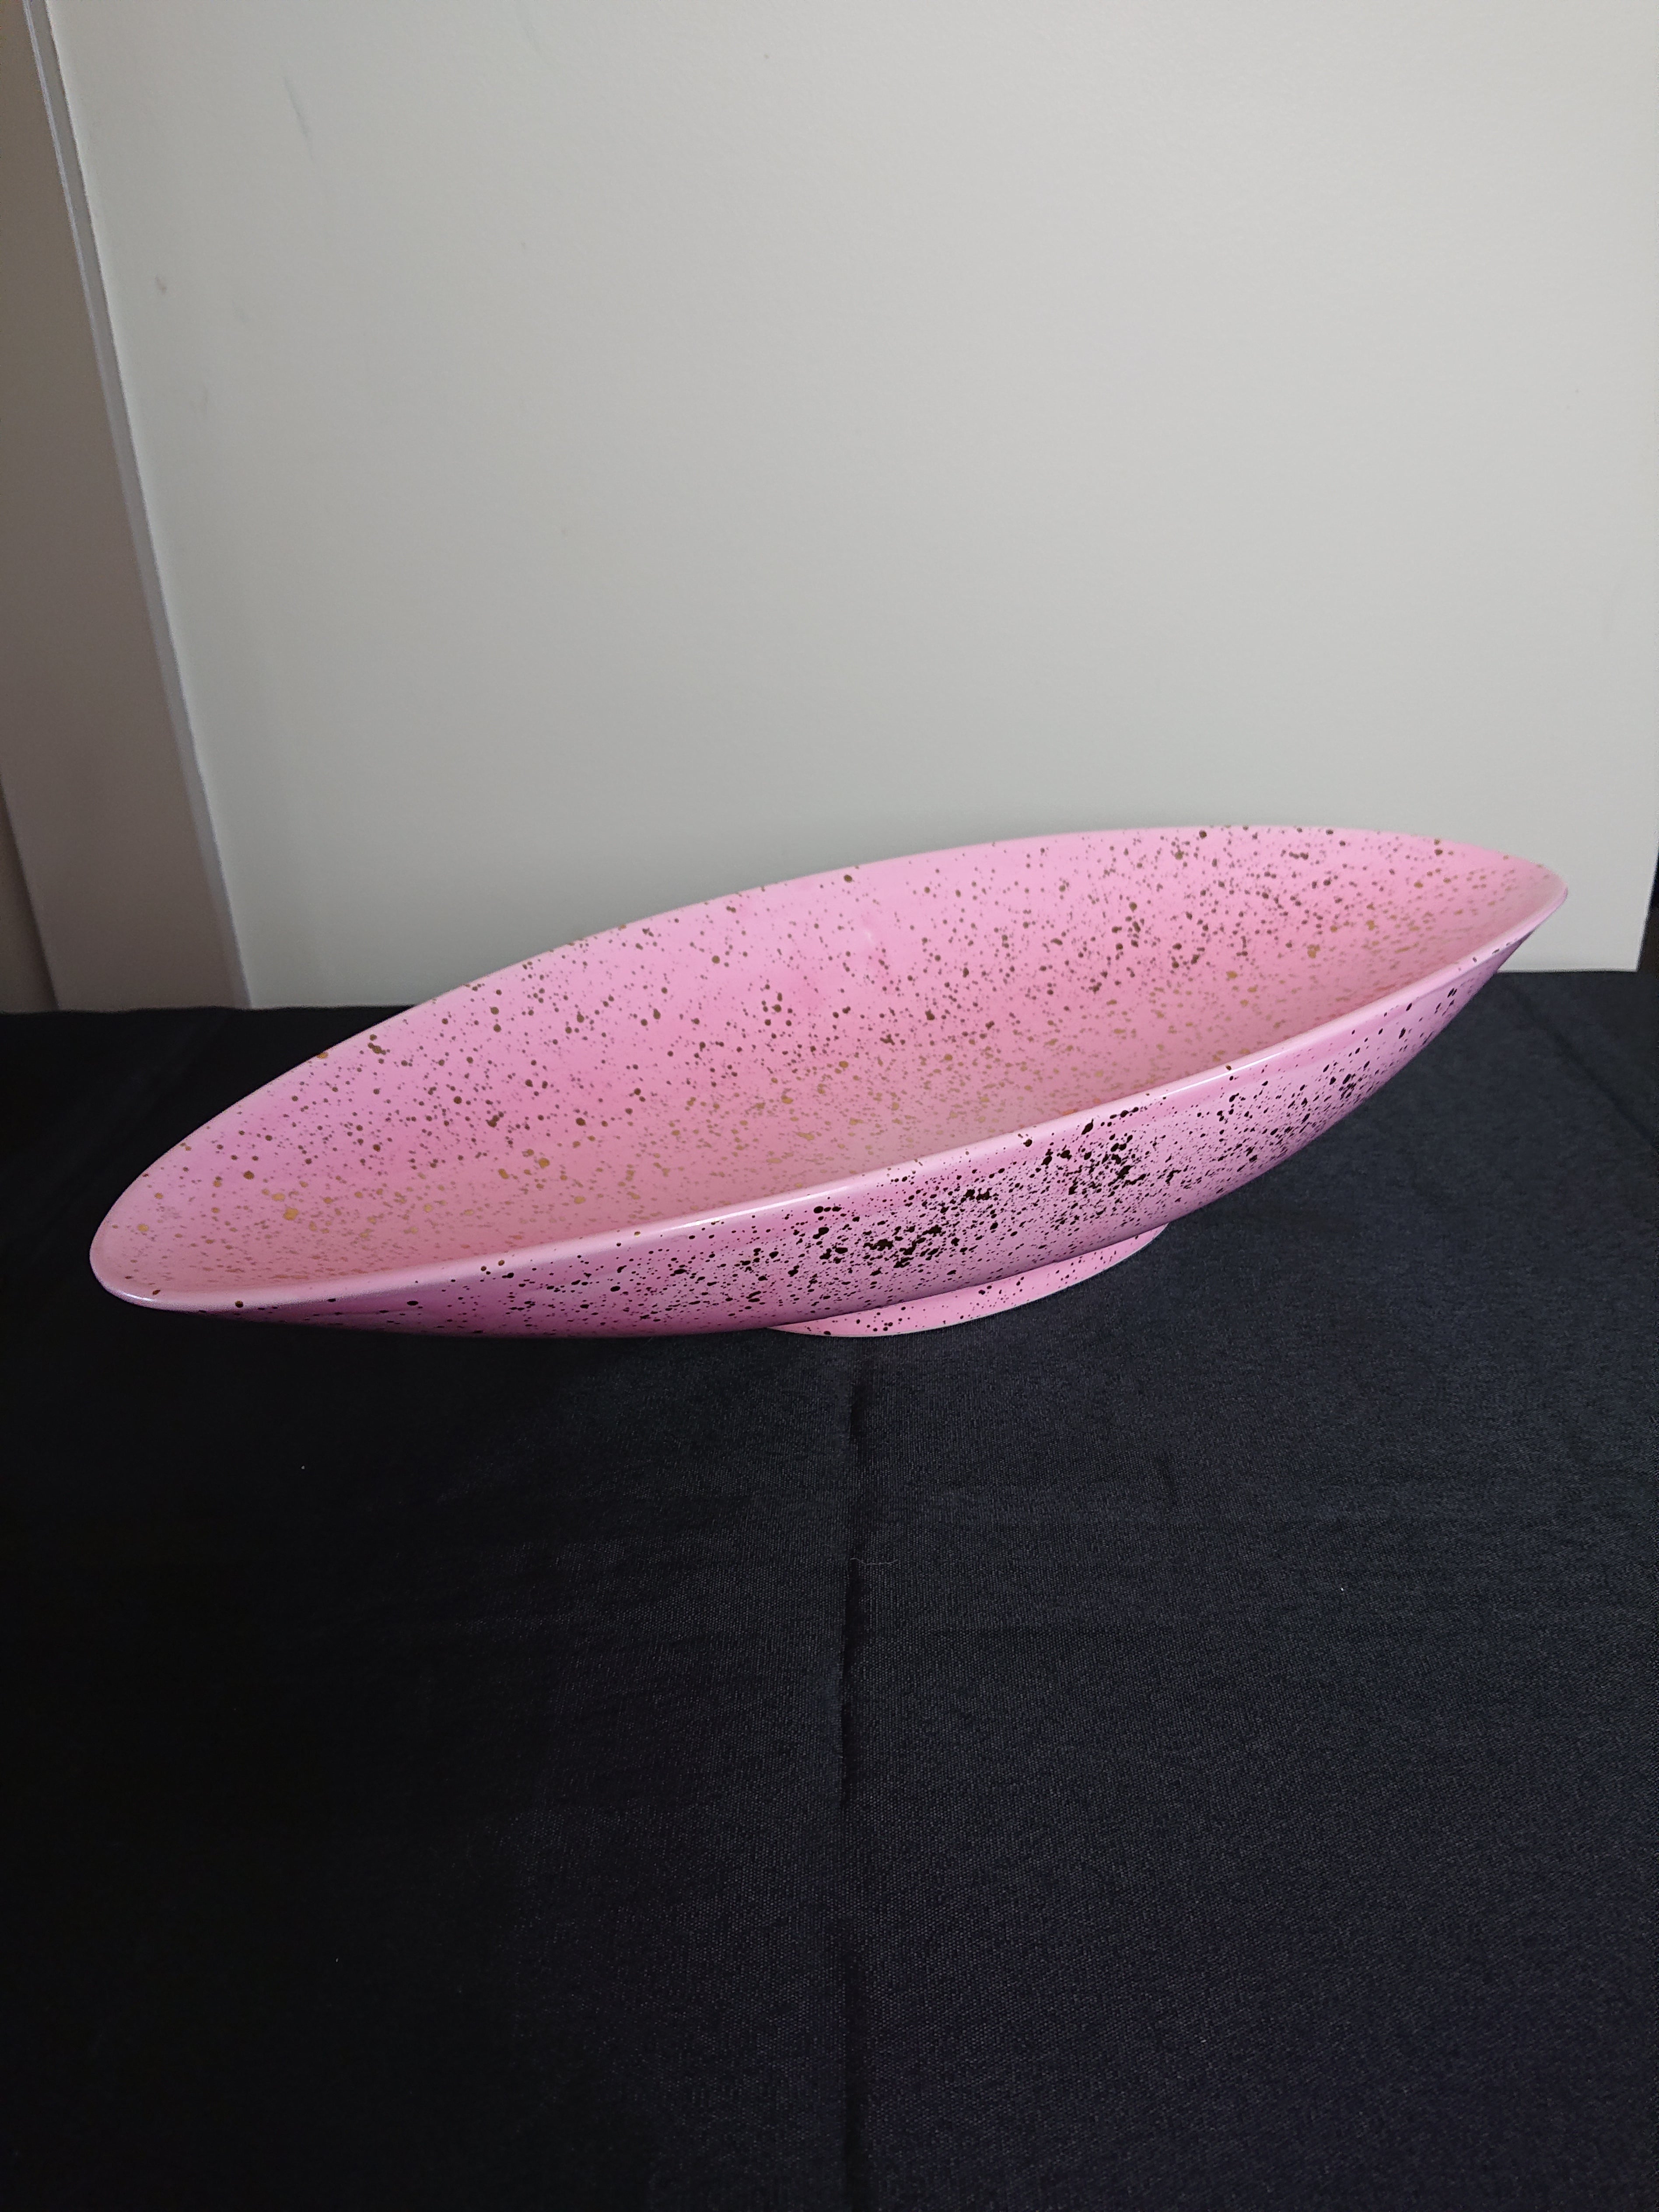 California Pottery Pink Dish